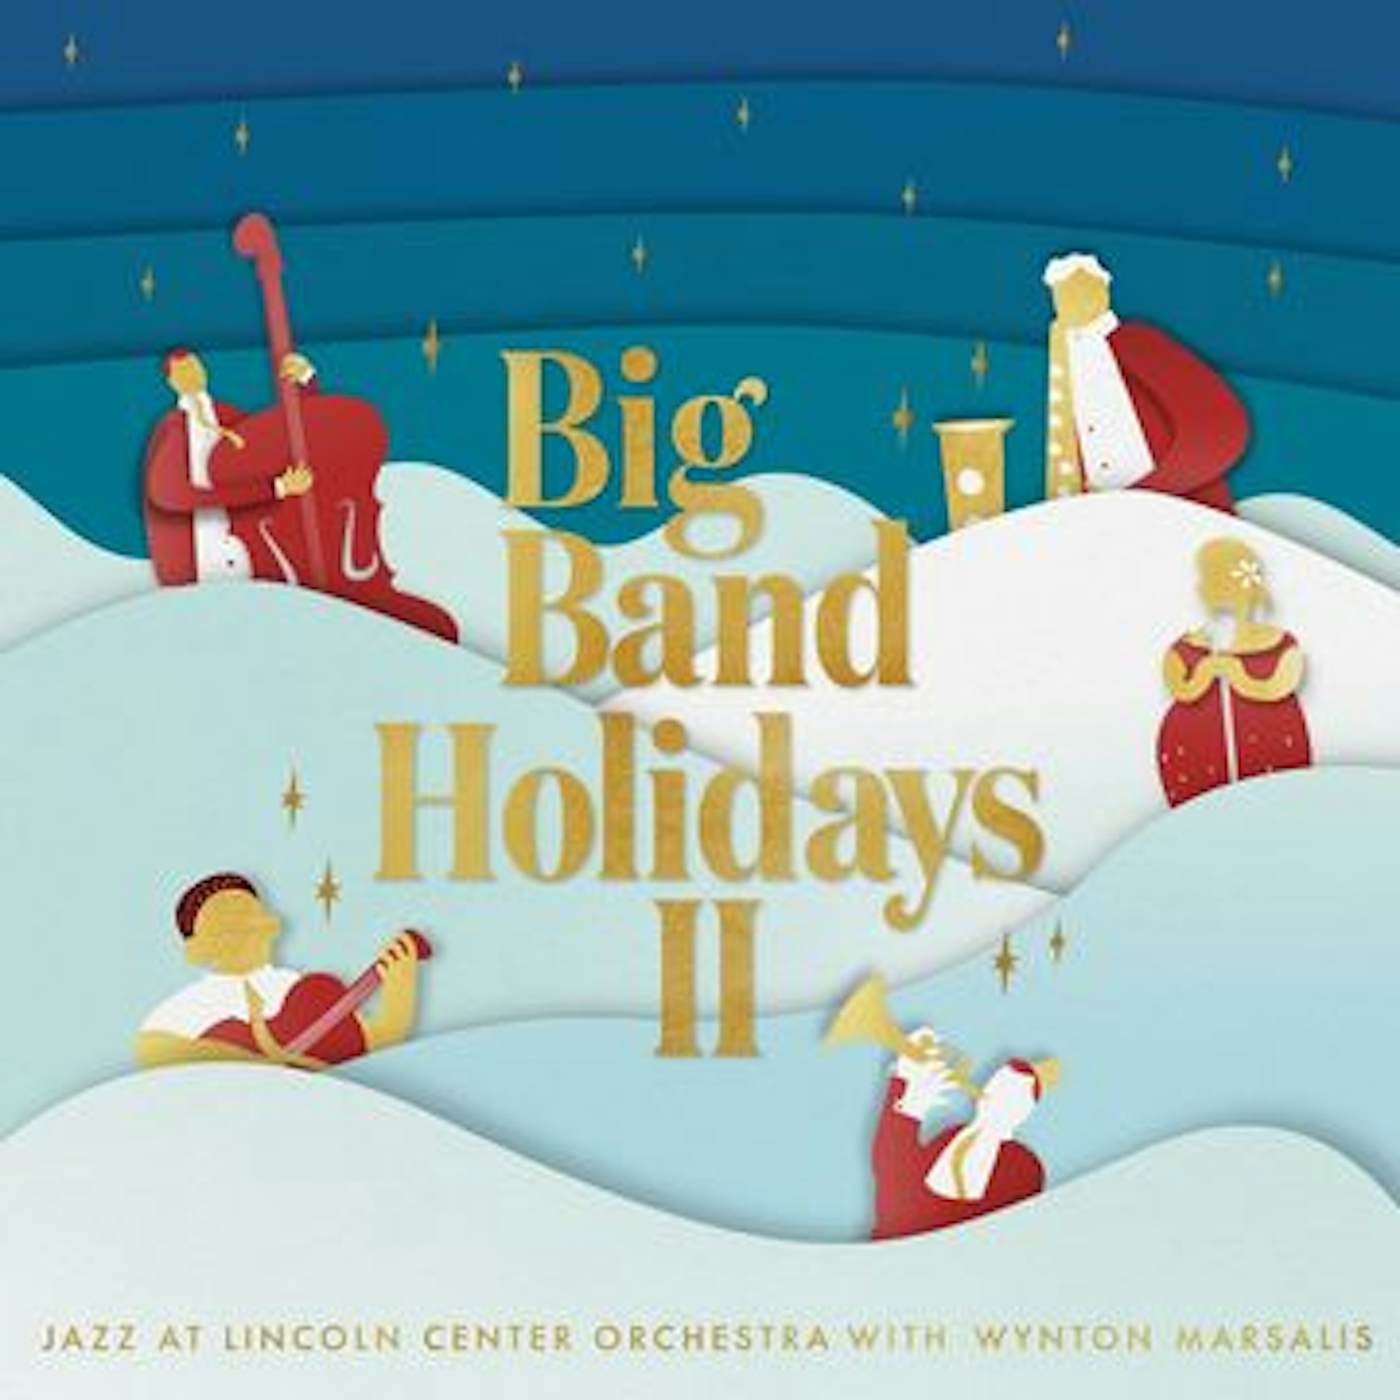 Jazz at Lincoln Center Orchestra with Wynton Marsalis Big Band Holidays II Vinyl Record